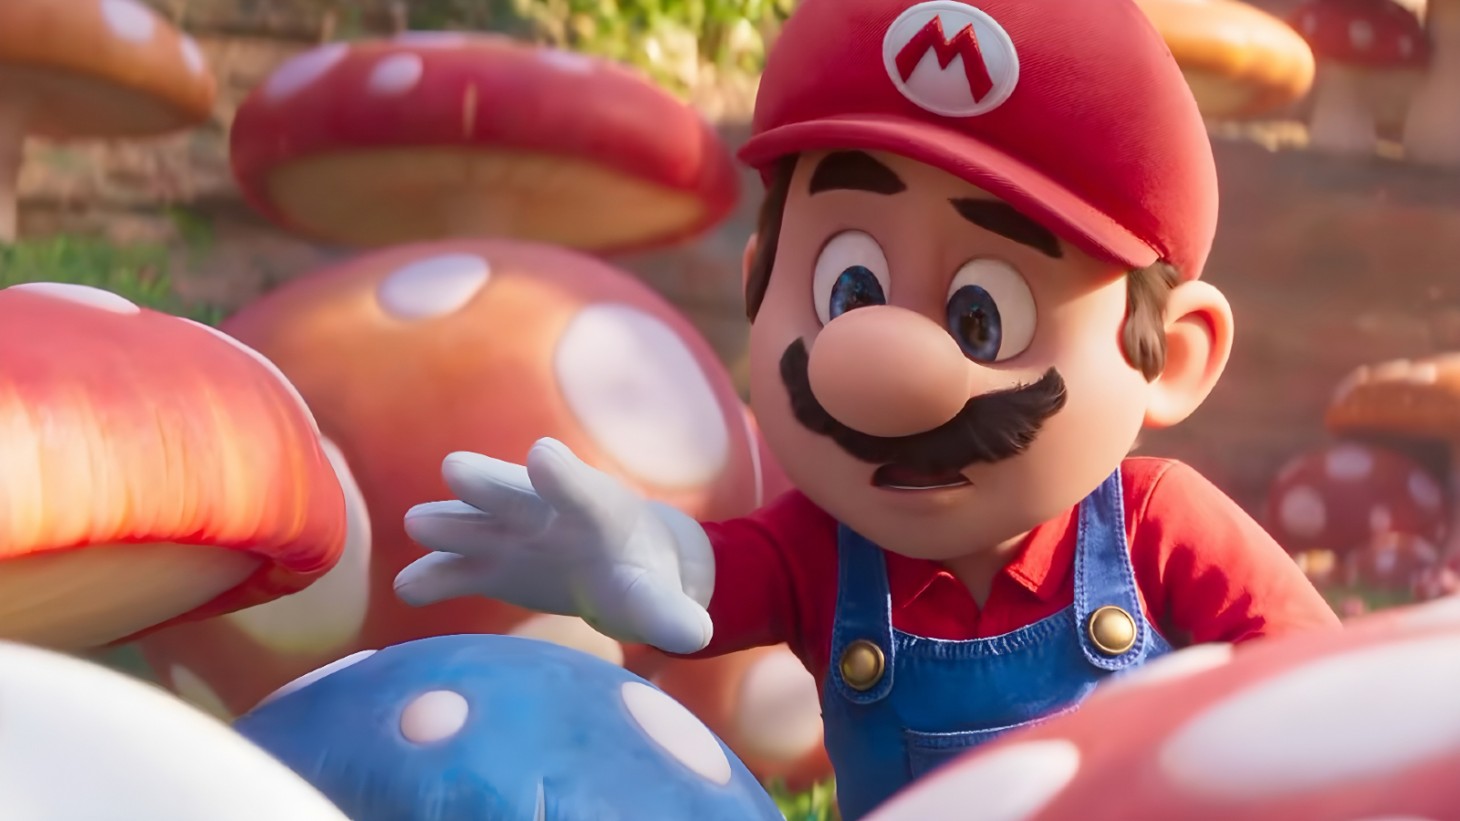 The Super Mario Bros. Movie - Trailer Final